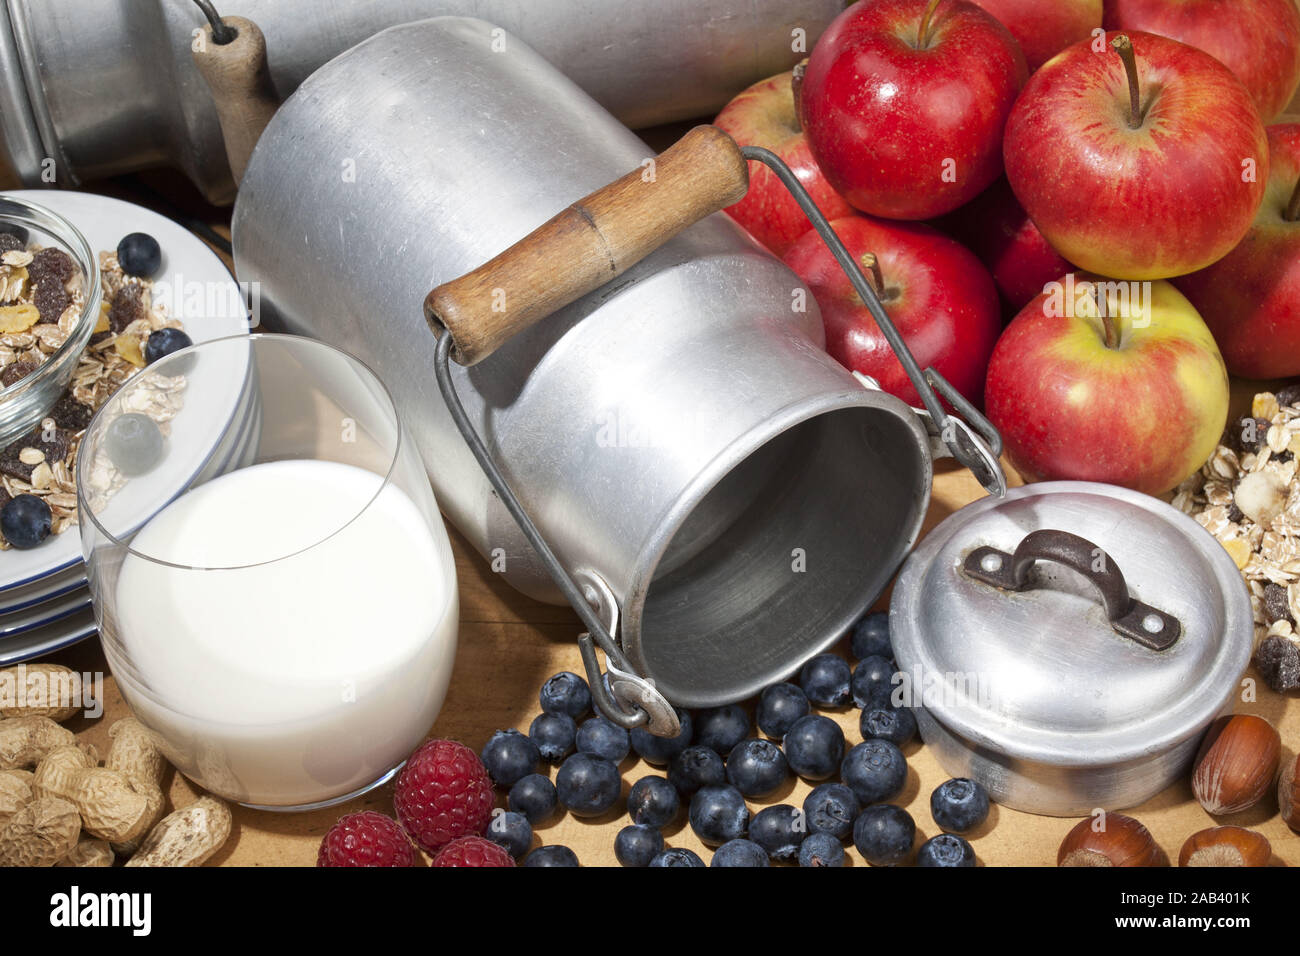 Verschiedene Fruechte, Milch und Cerealien |Various fruits, milk and cereal| Stock Photo